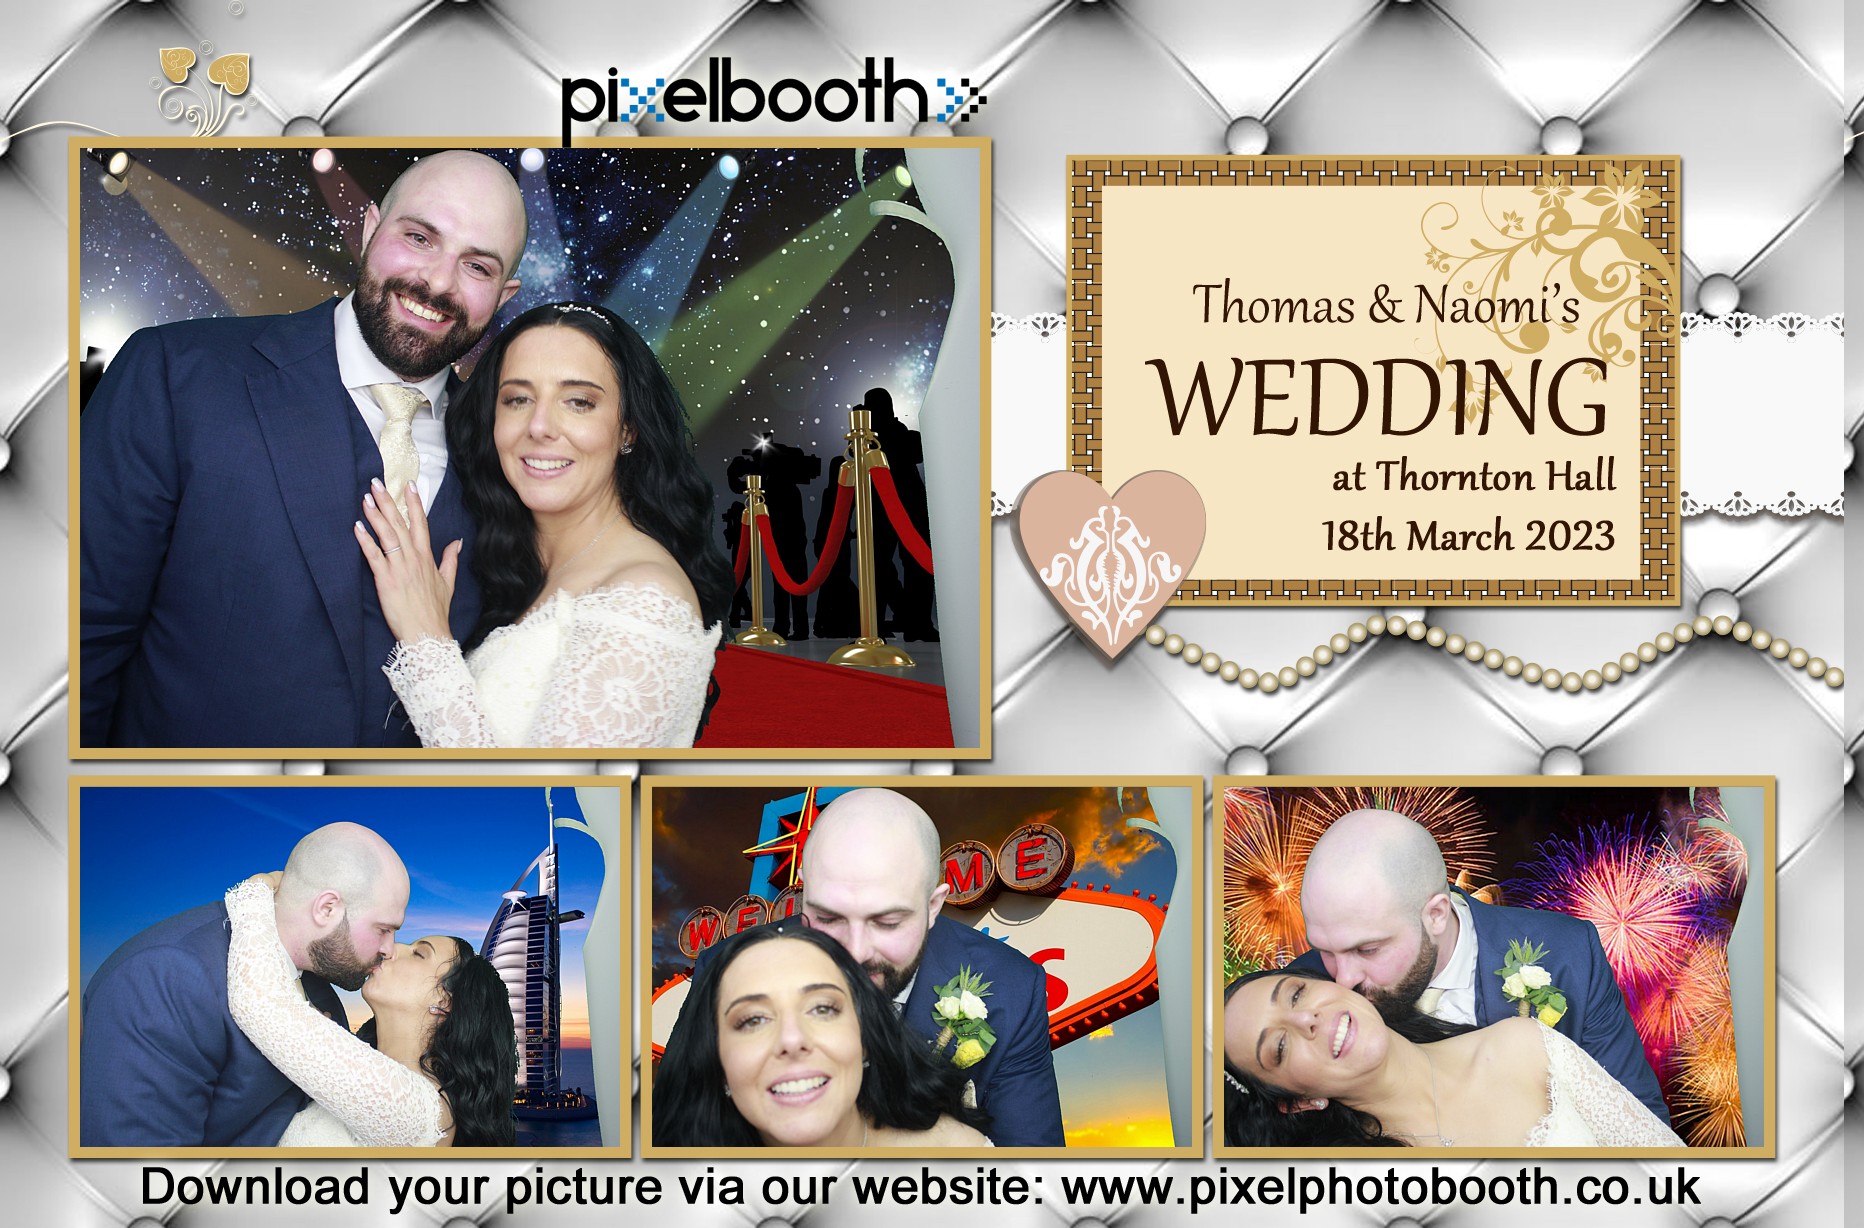 18th March 2023: Thomas and Naomi's Wedding at Thornton Hall